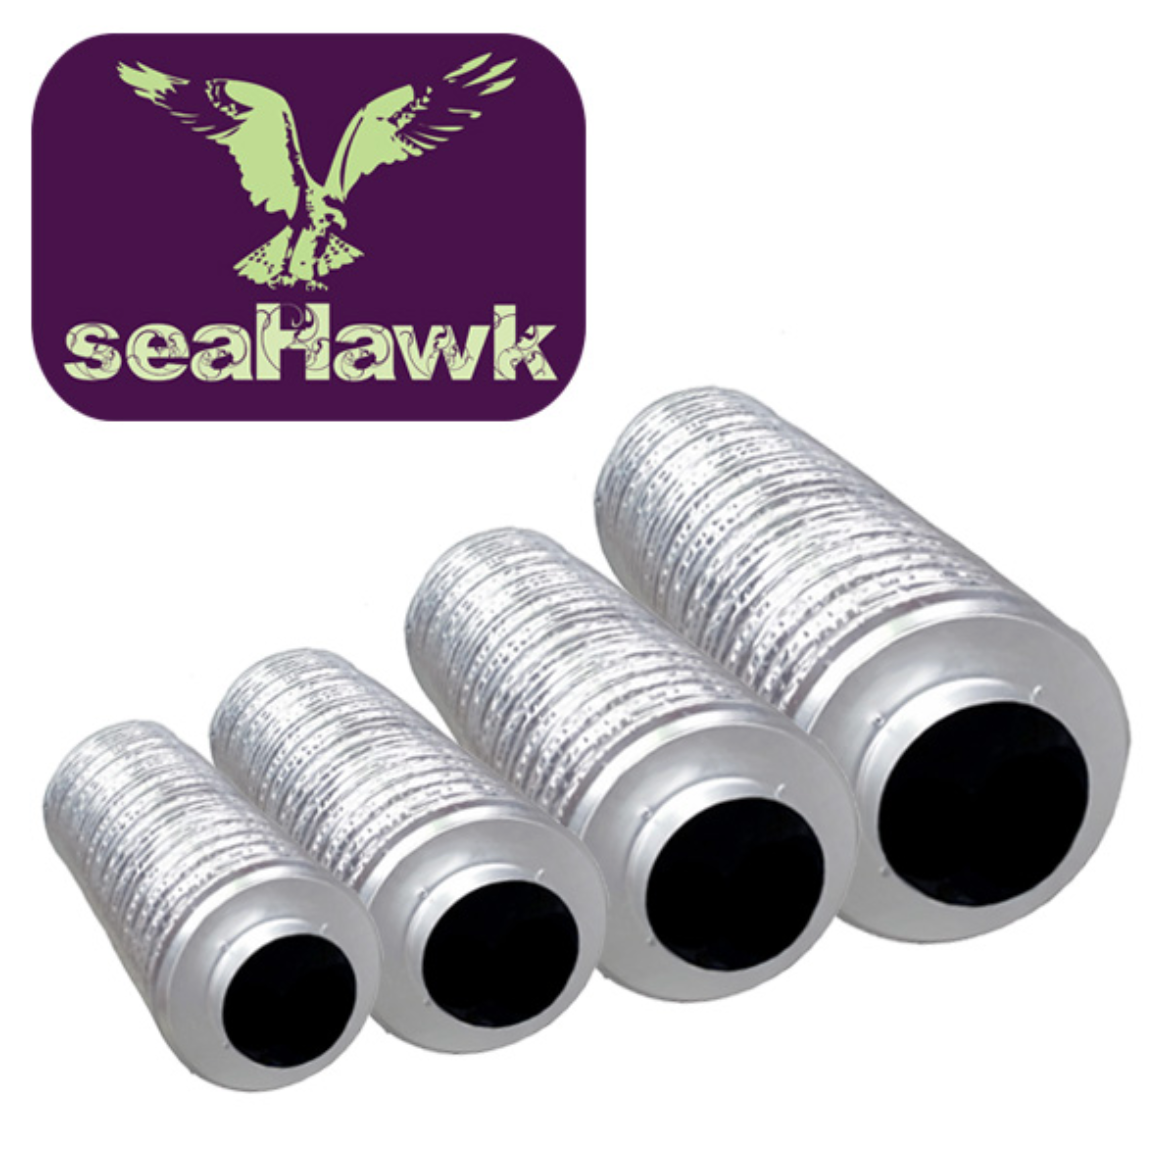 Seahawk Flexible Silencer Duct